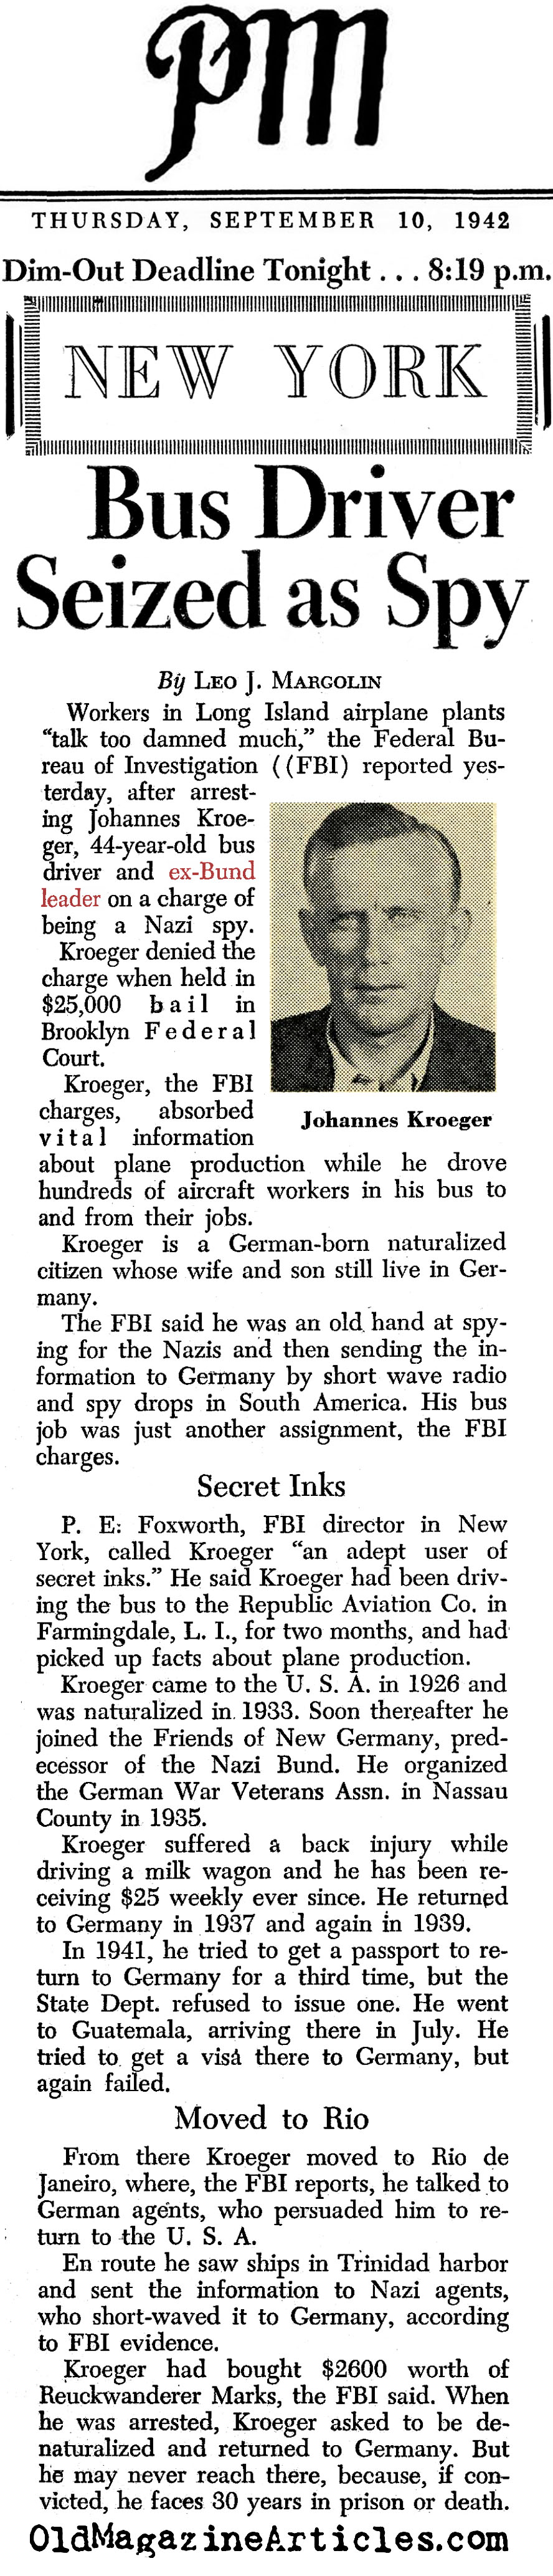 Bundist Arrested As Spy (PM Tabloid, 1942)